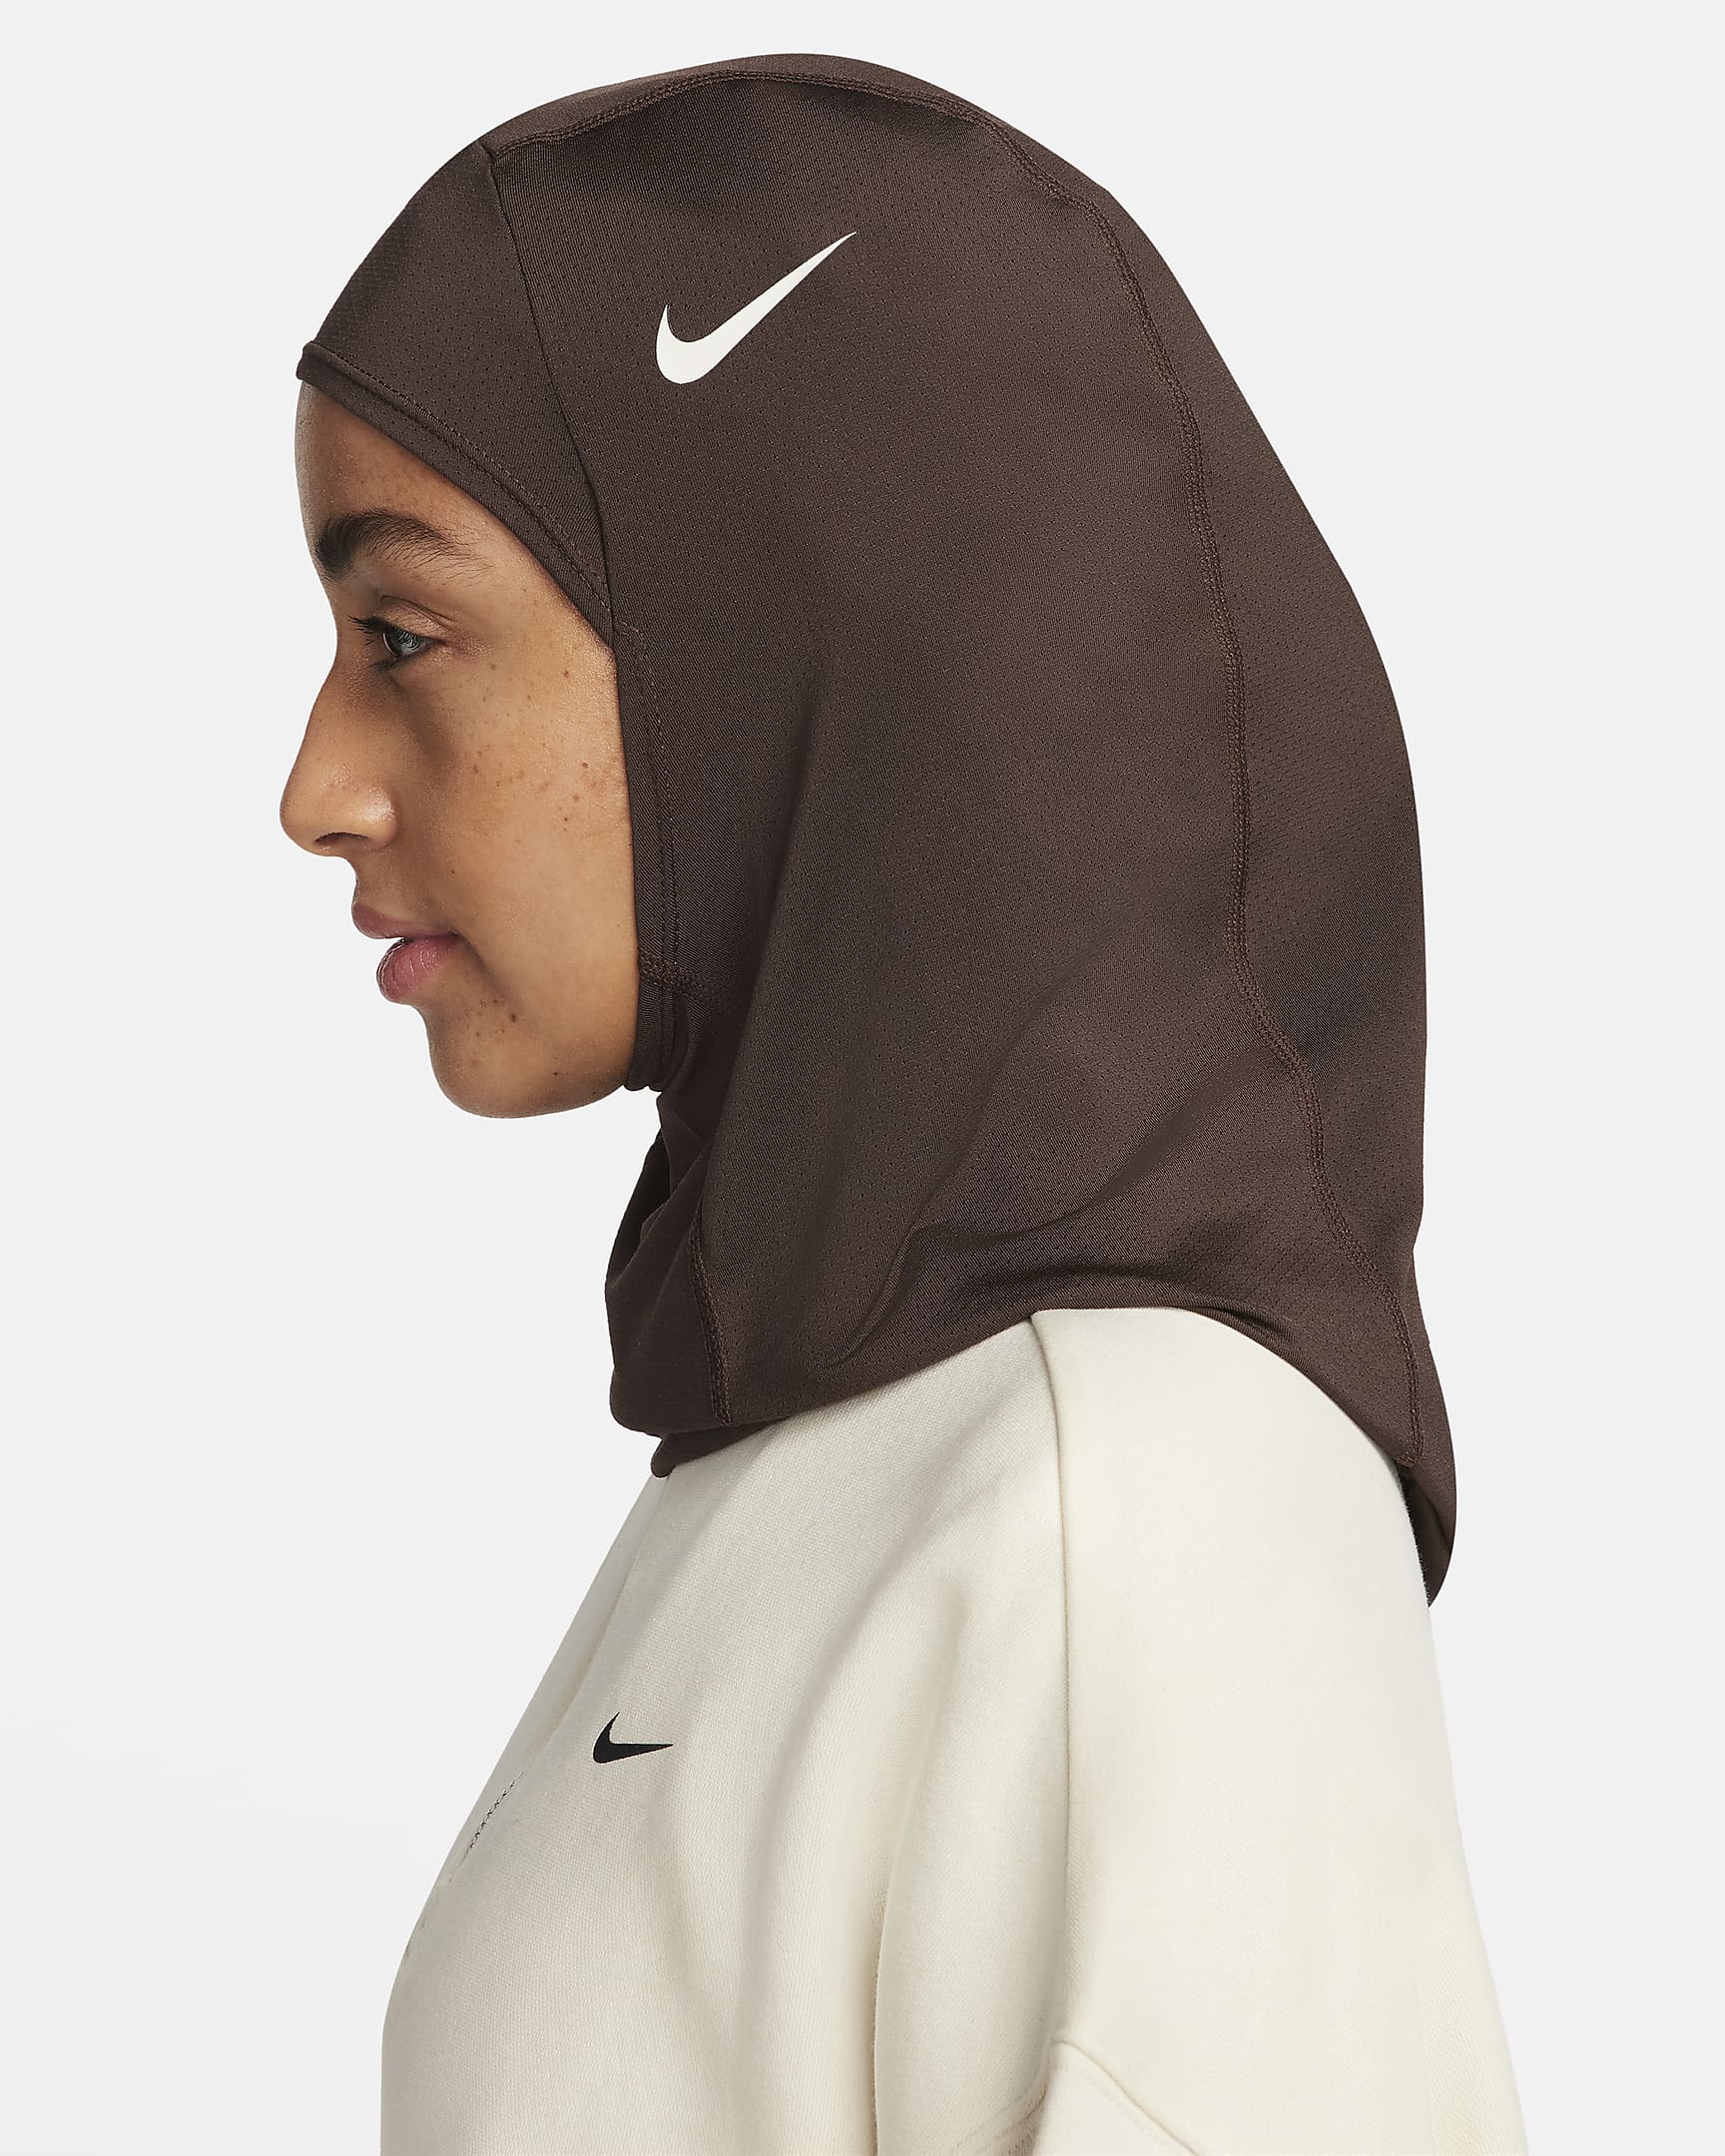 Nike Pro Hijab 2.0 - Baroque Brown/Sail